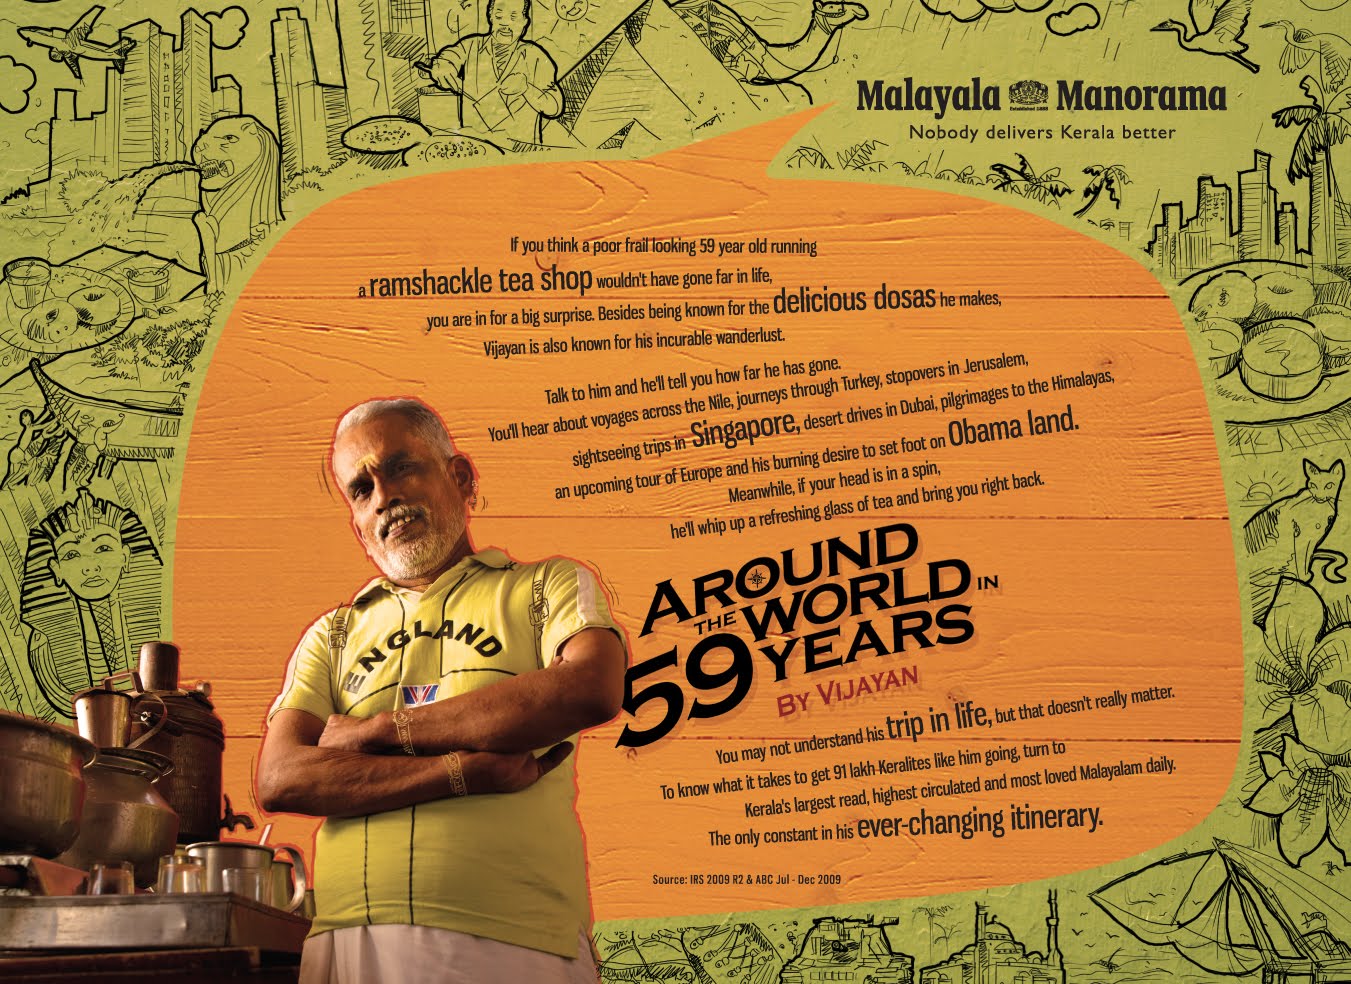 Malayala Manorama - Around the World in 59 Years by Vijayan | Stark Communications Pvt Ltd